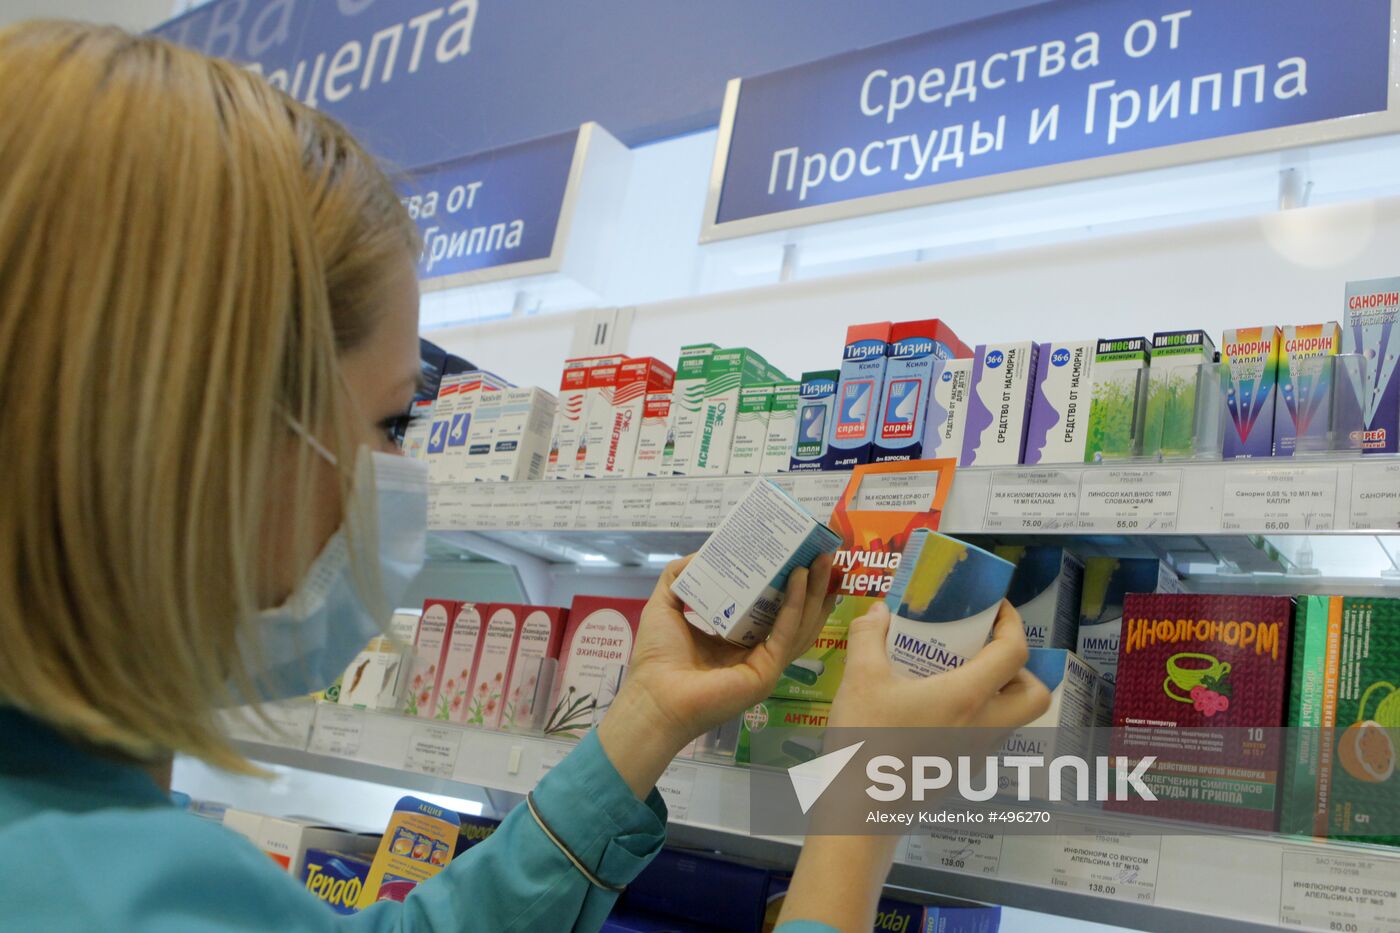 Sale of antiviral medication